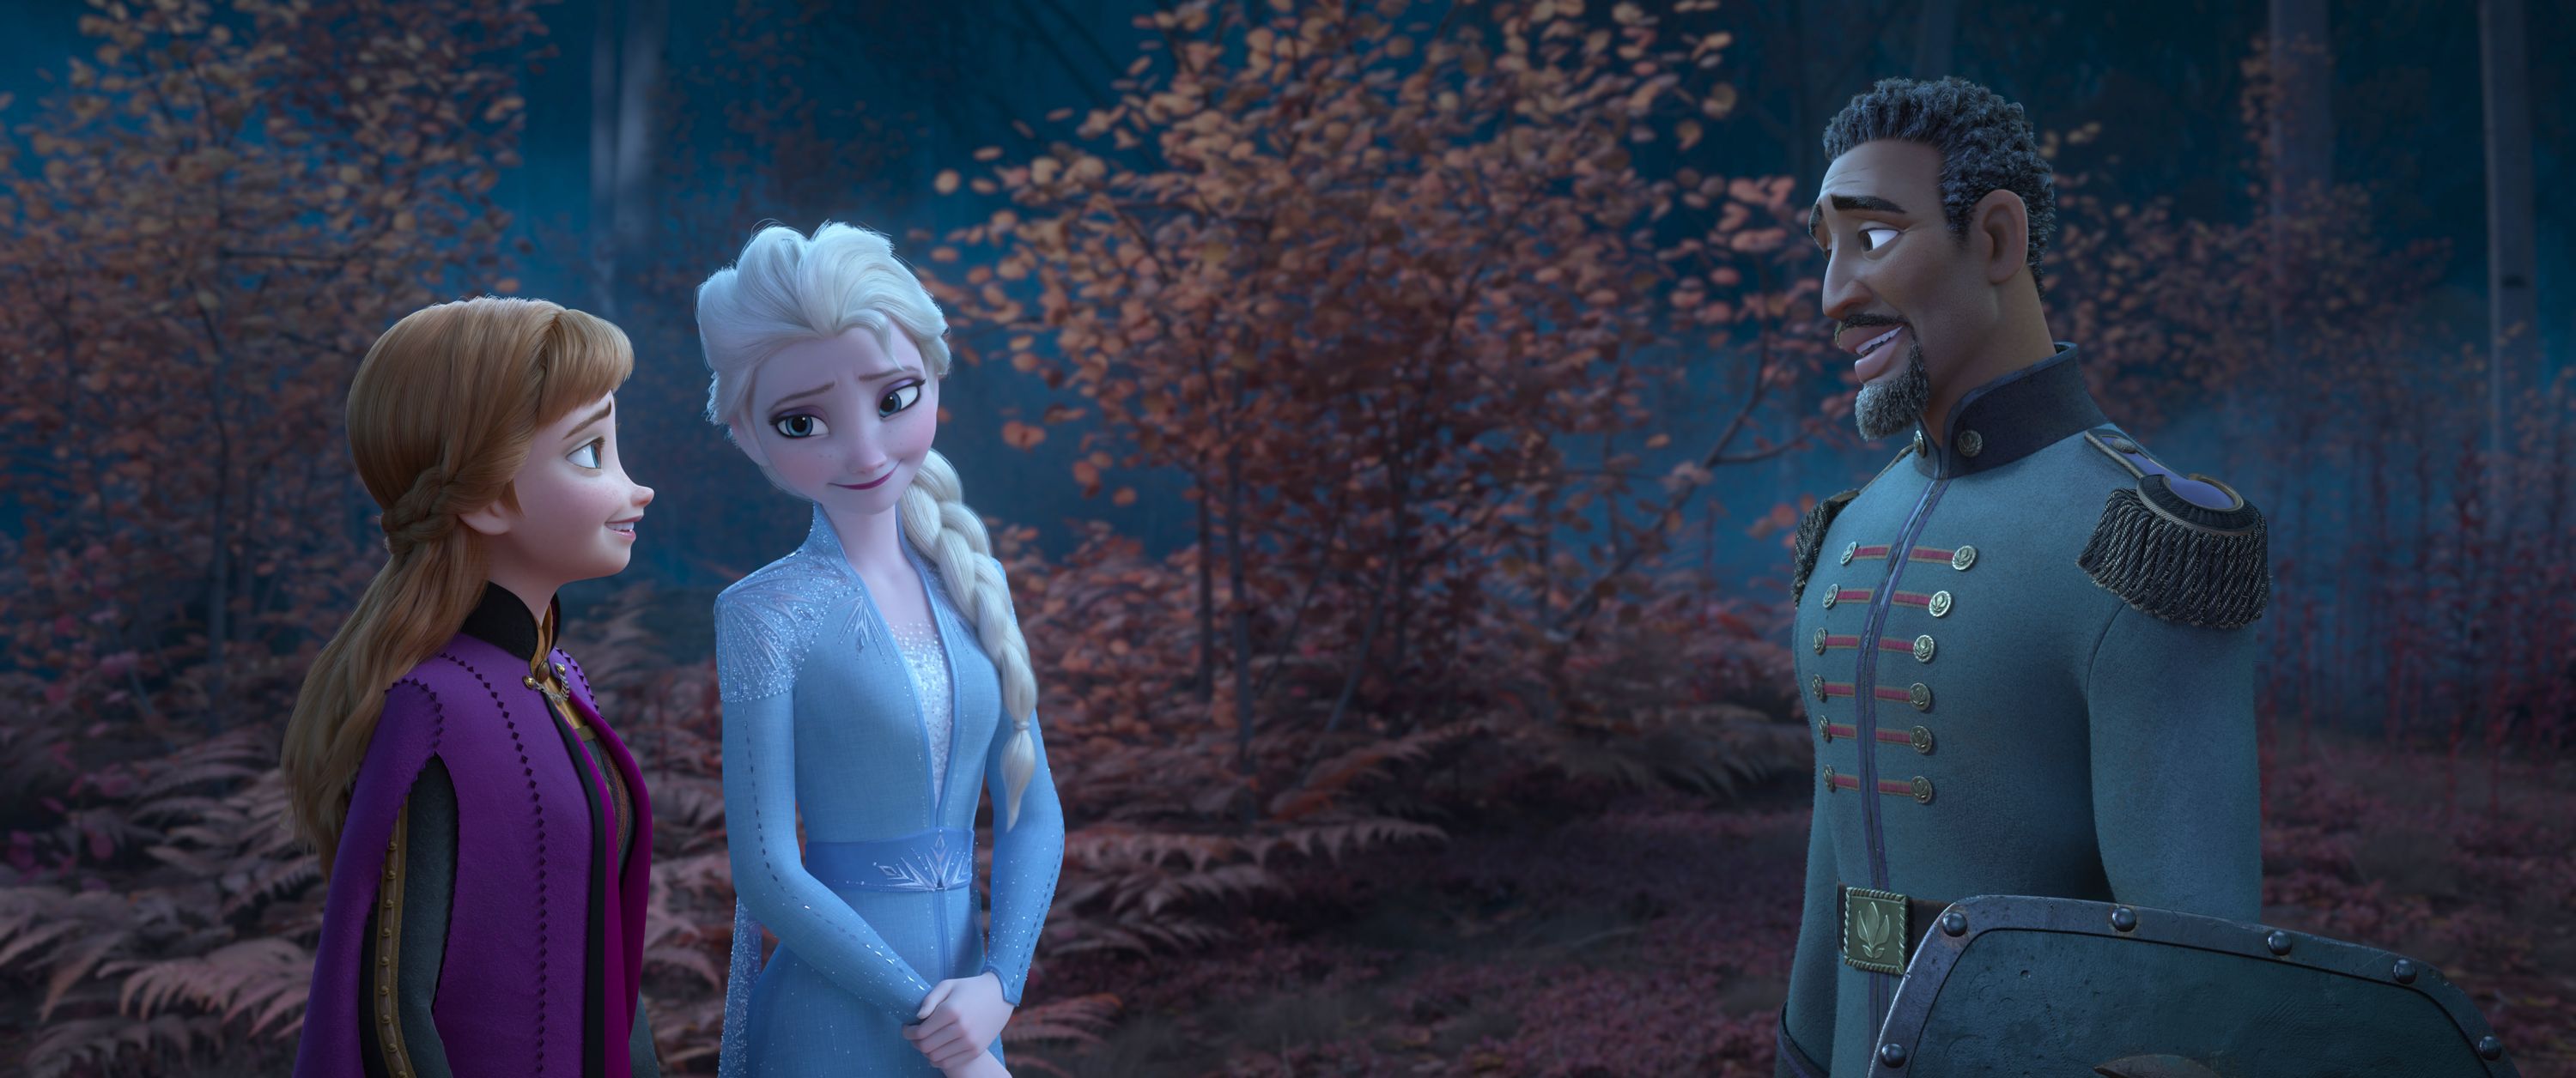 5 reasons to watch Frozen 2 - The Statesman